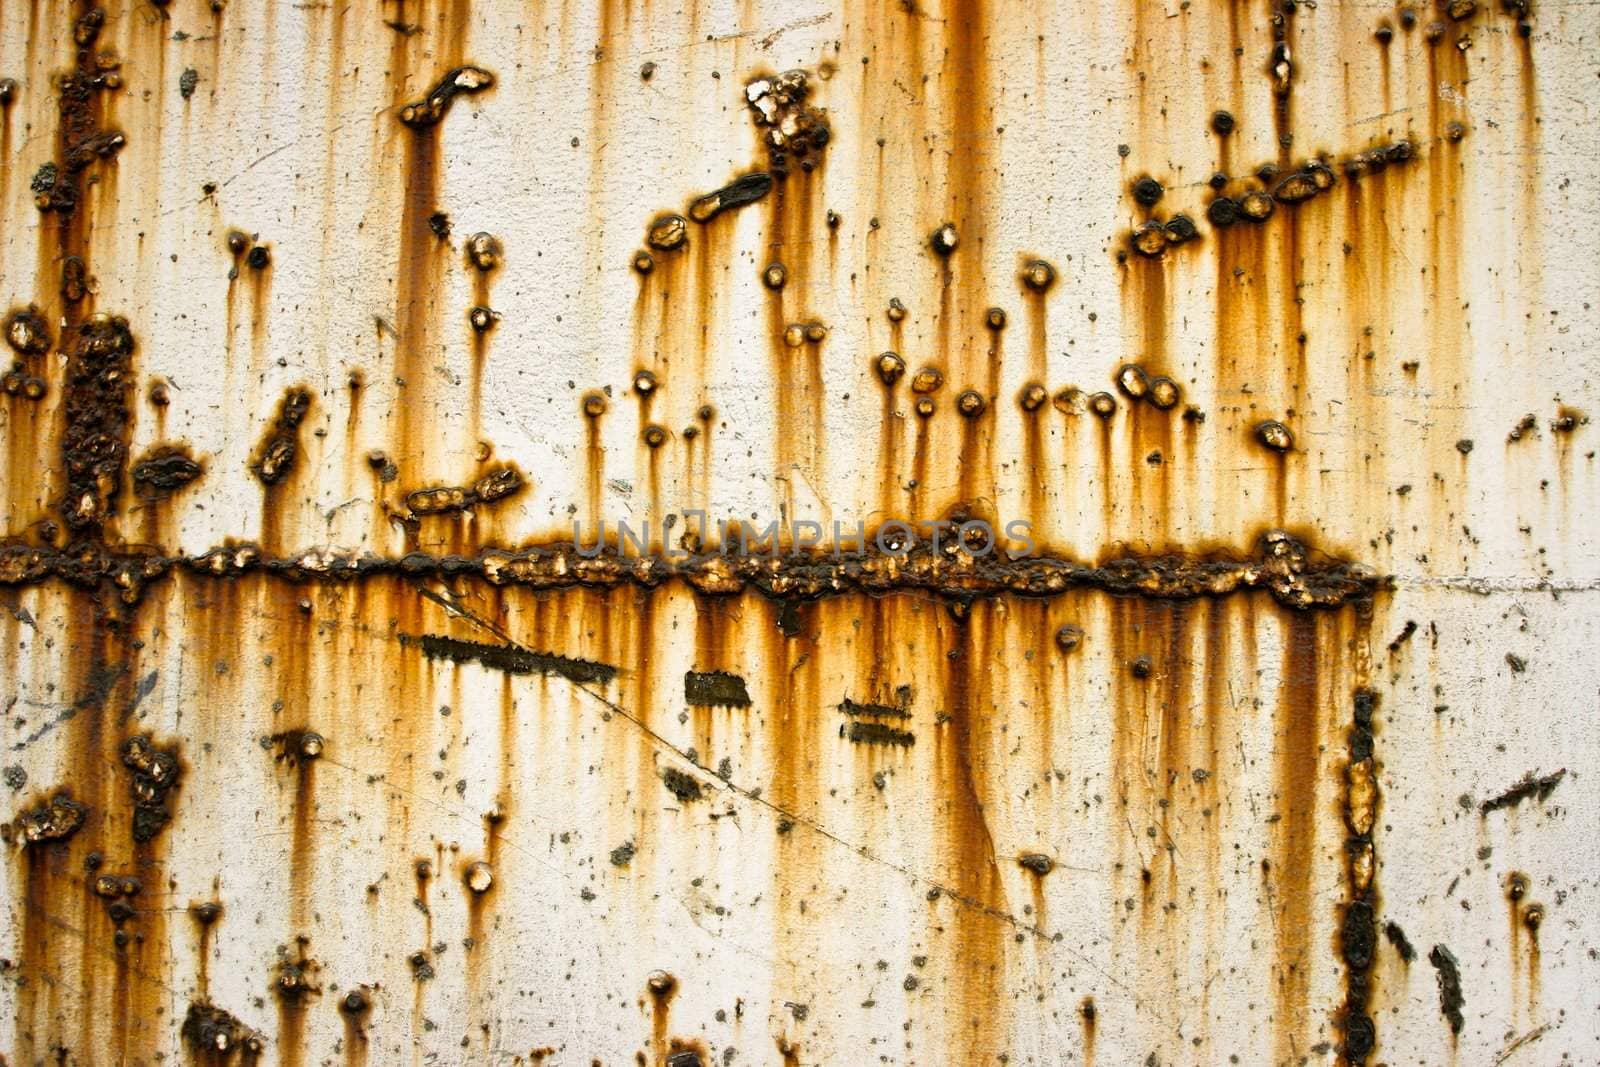 Rusty Metallic Wall by yayalineage